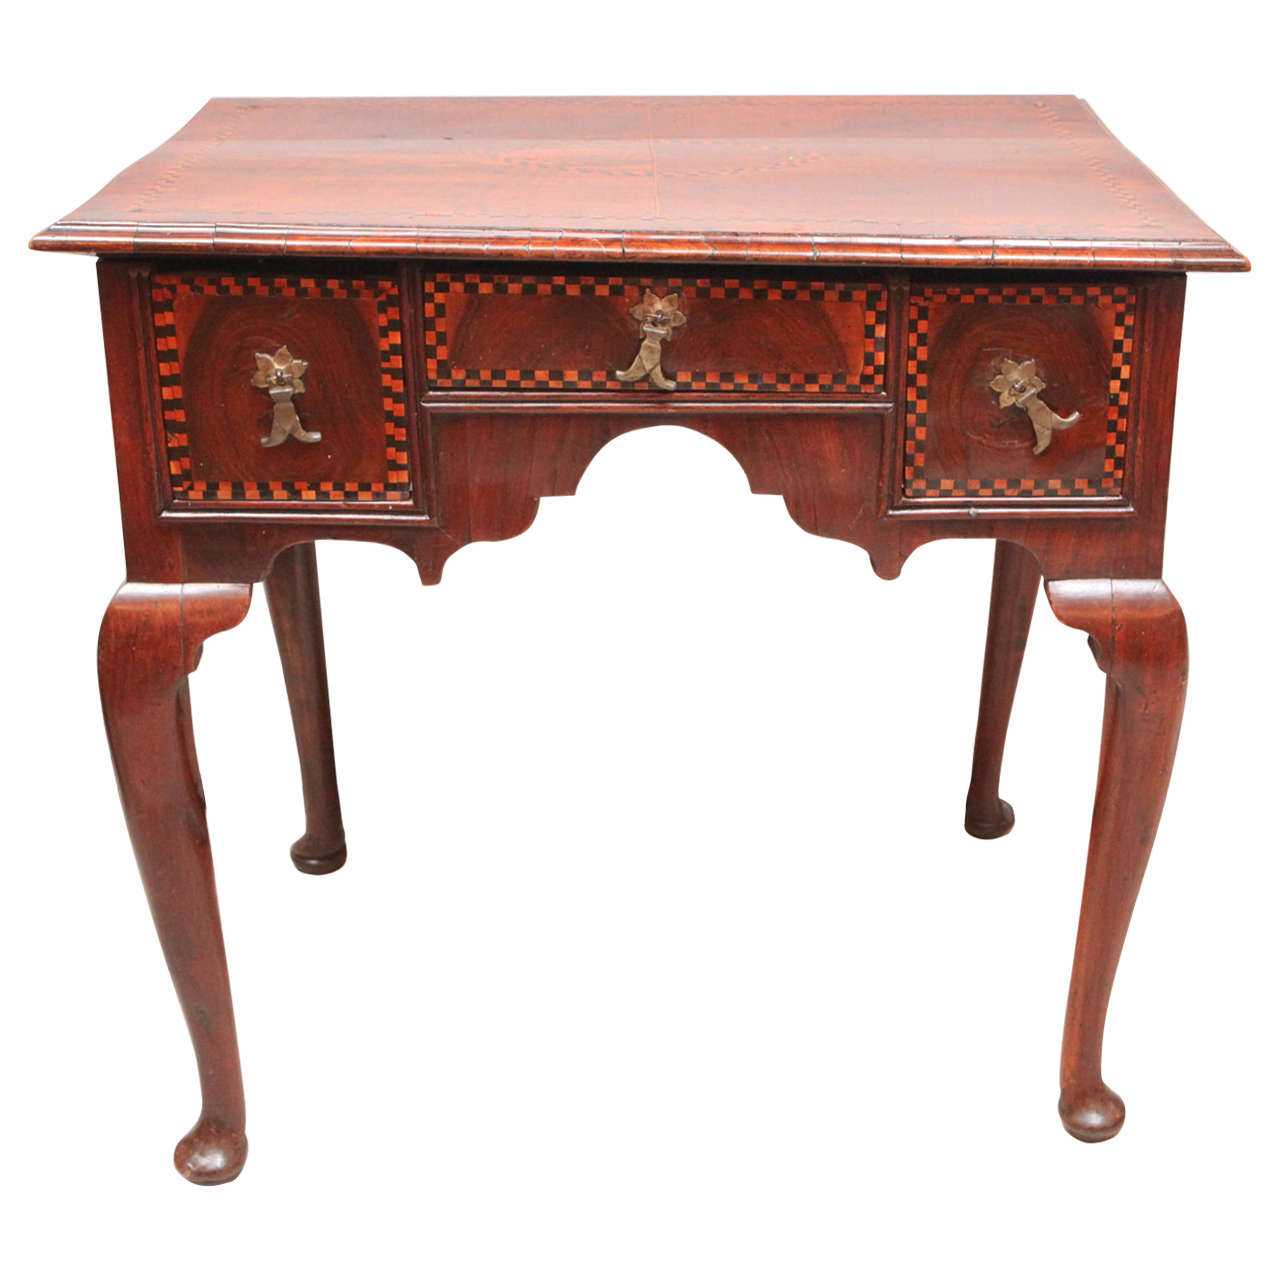 19th Century English Inlaid Three-Drawer Low Boy End Table